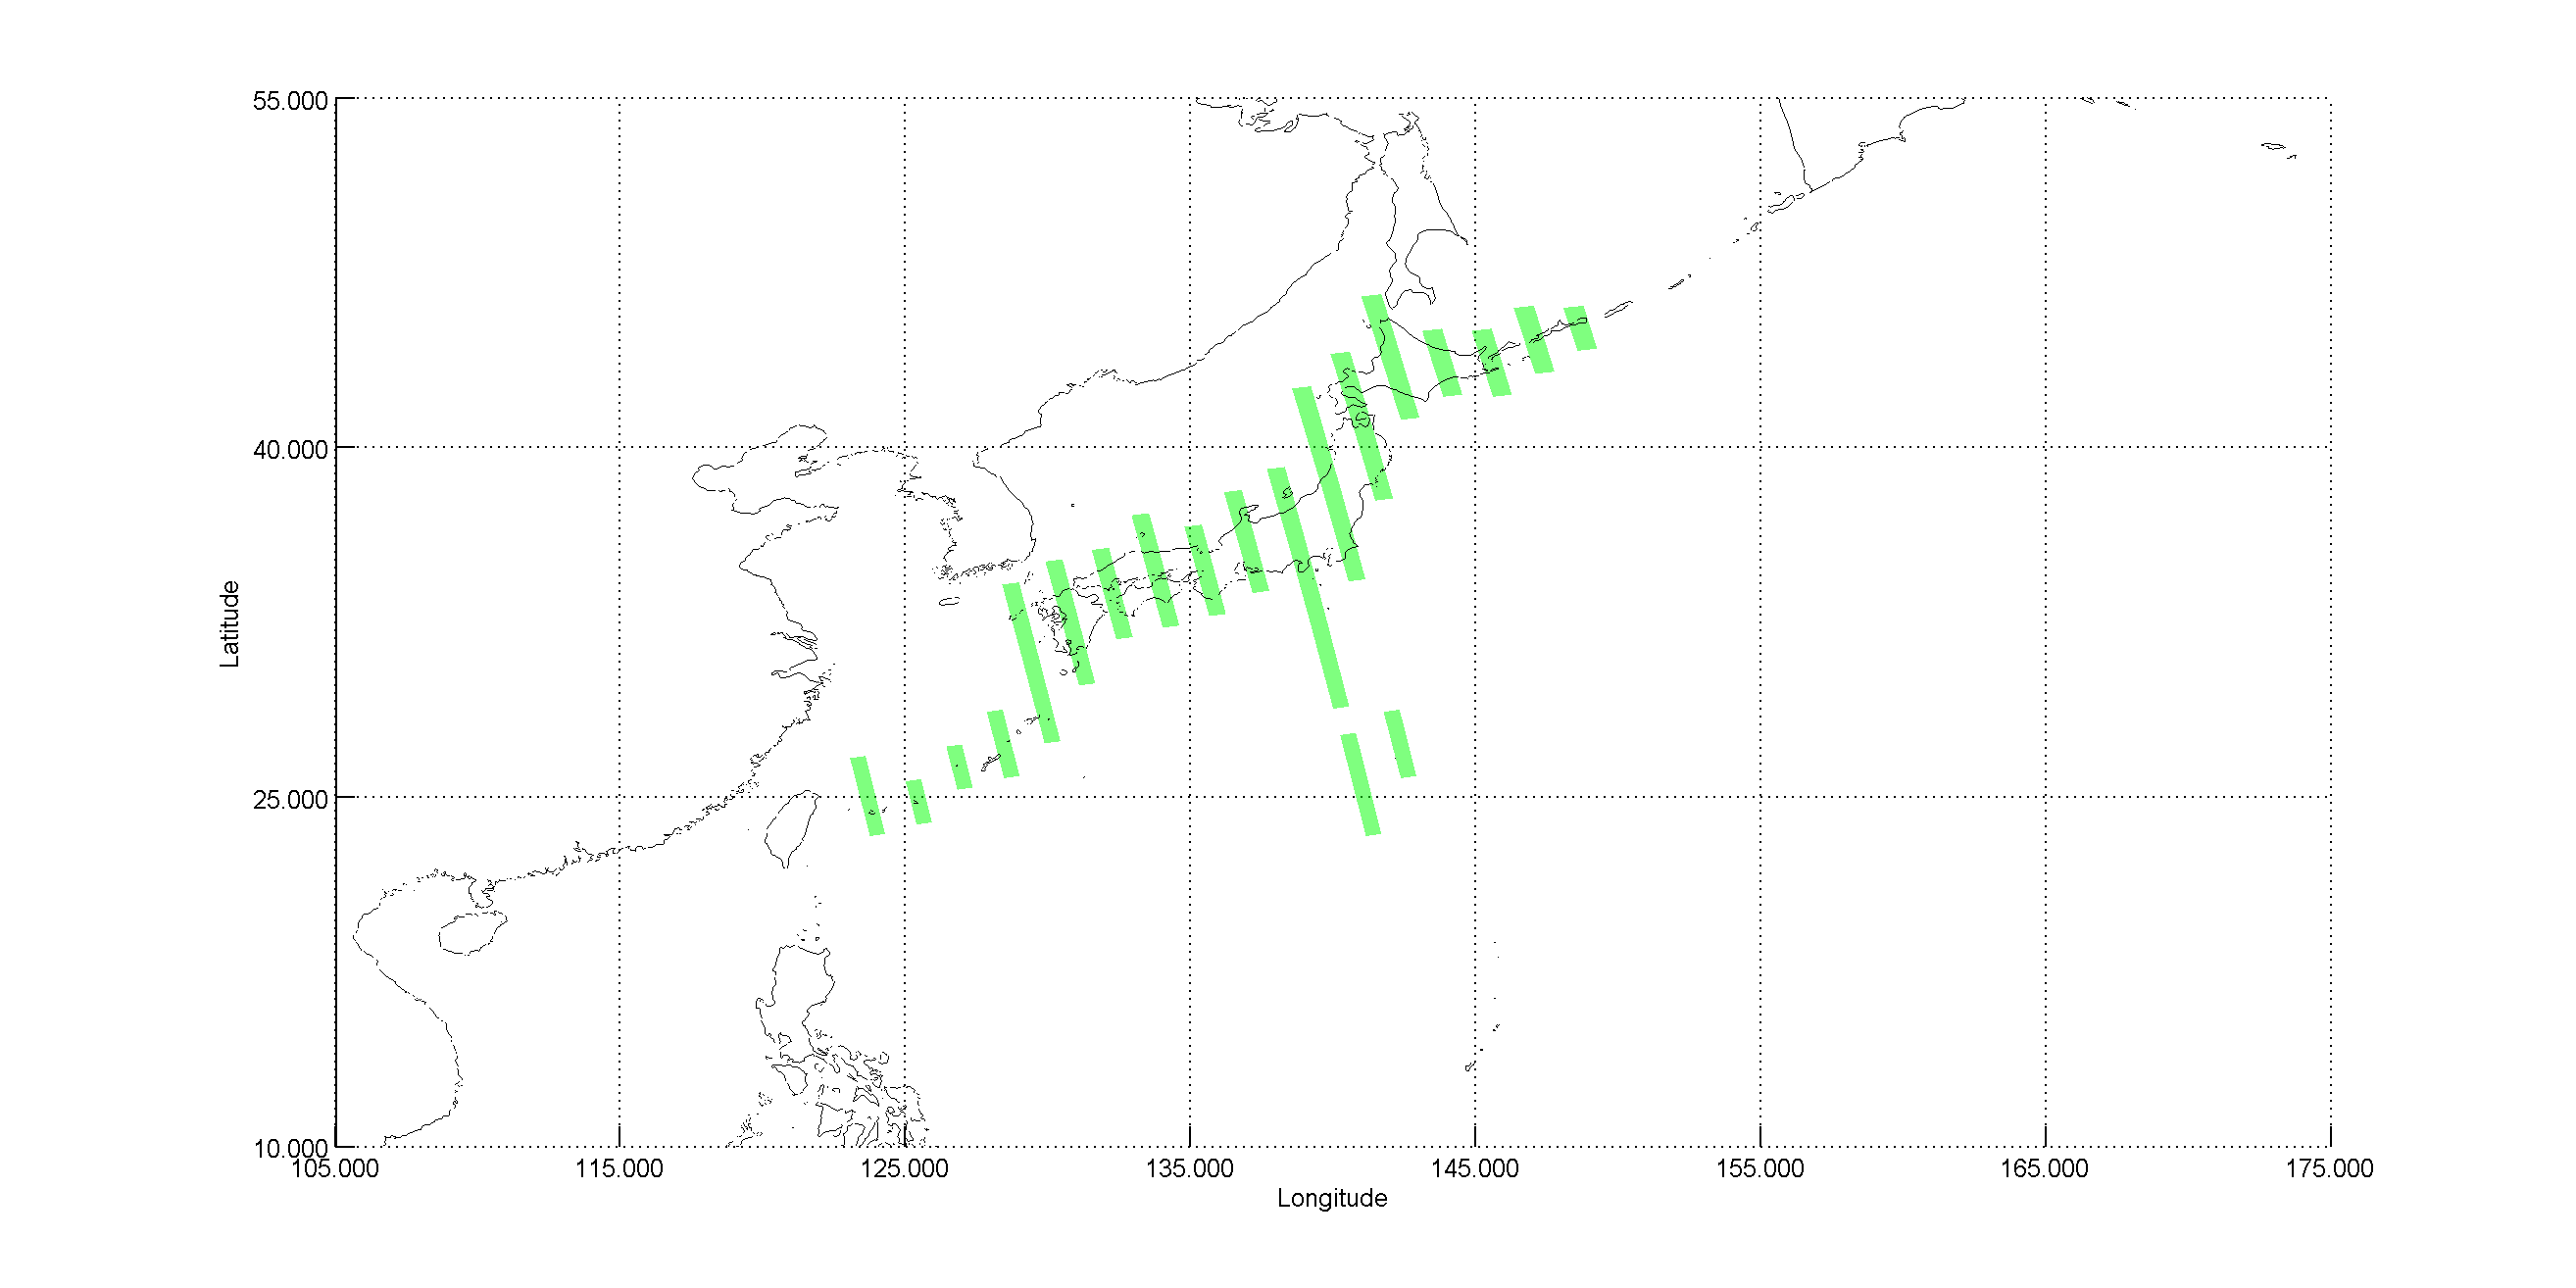 CYCLE_145 - Japan Ascending passes